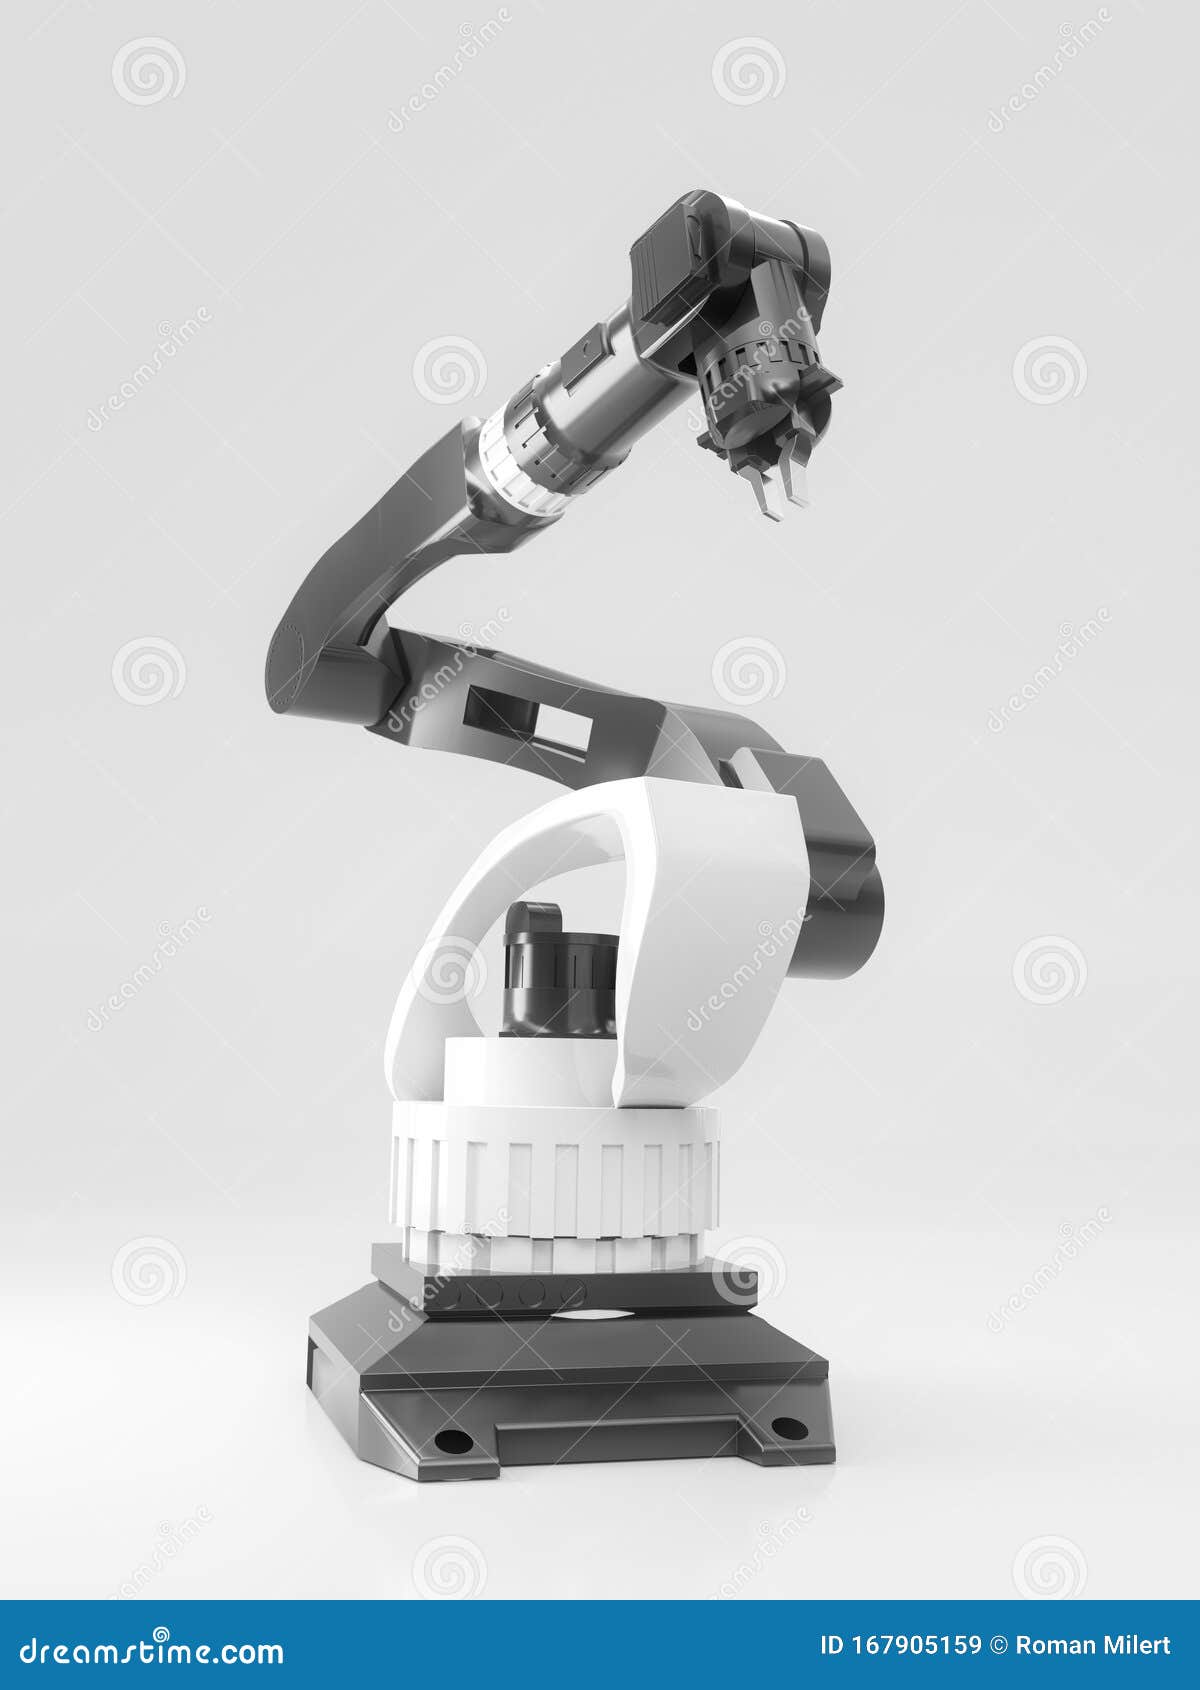 robotized arm model